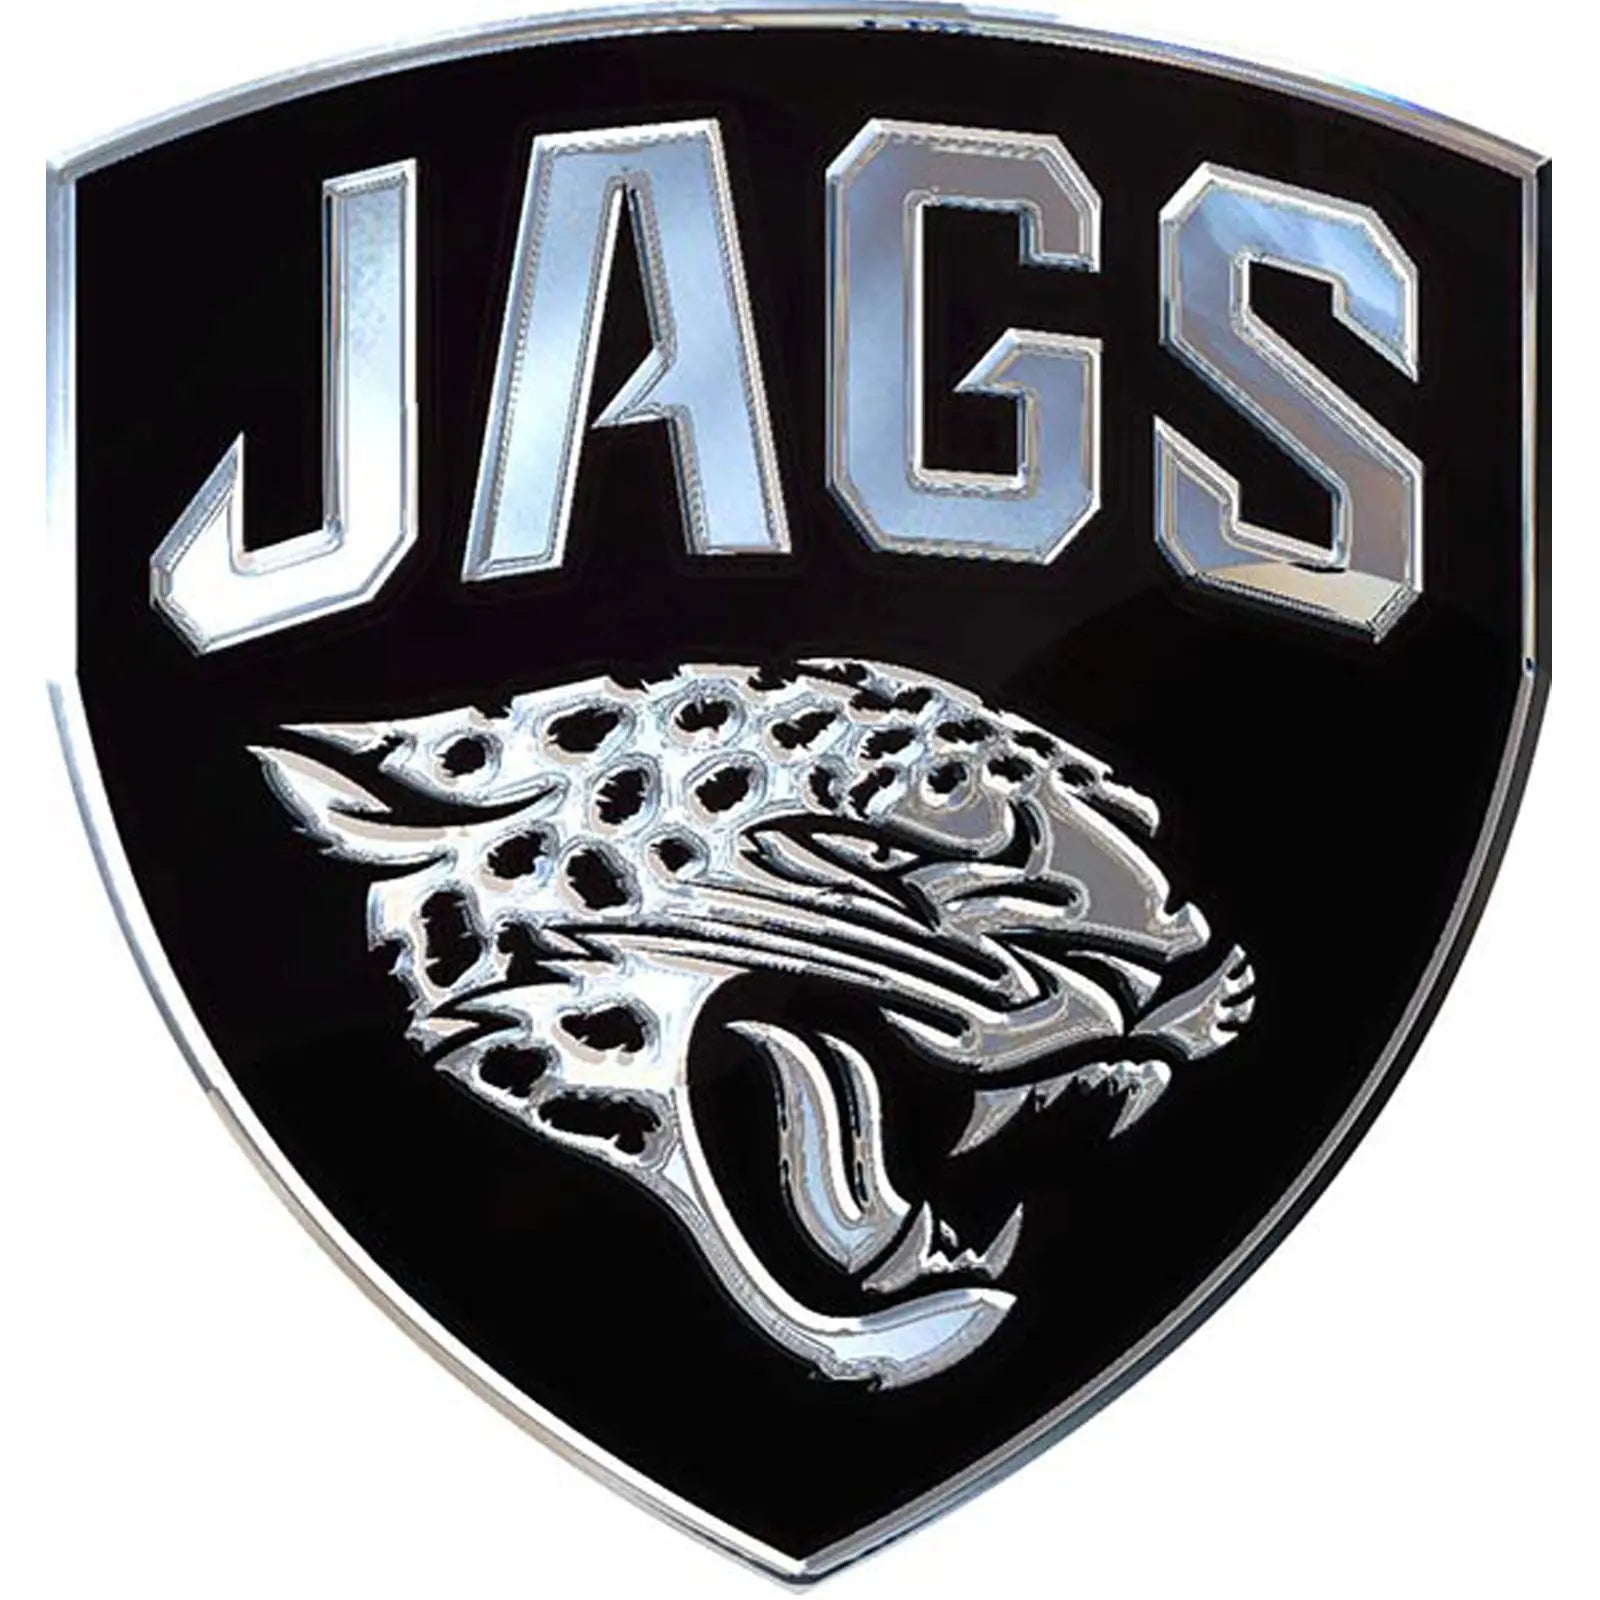 jacksonville jaguars car flags